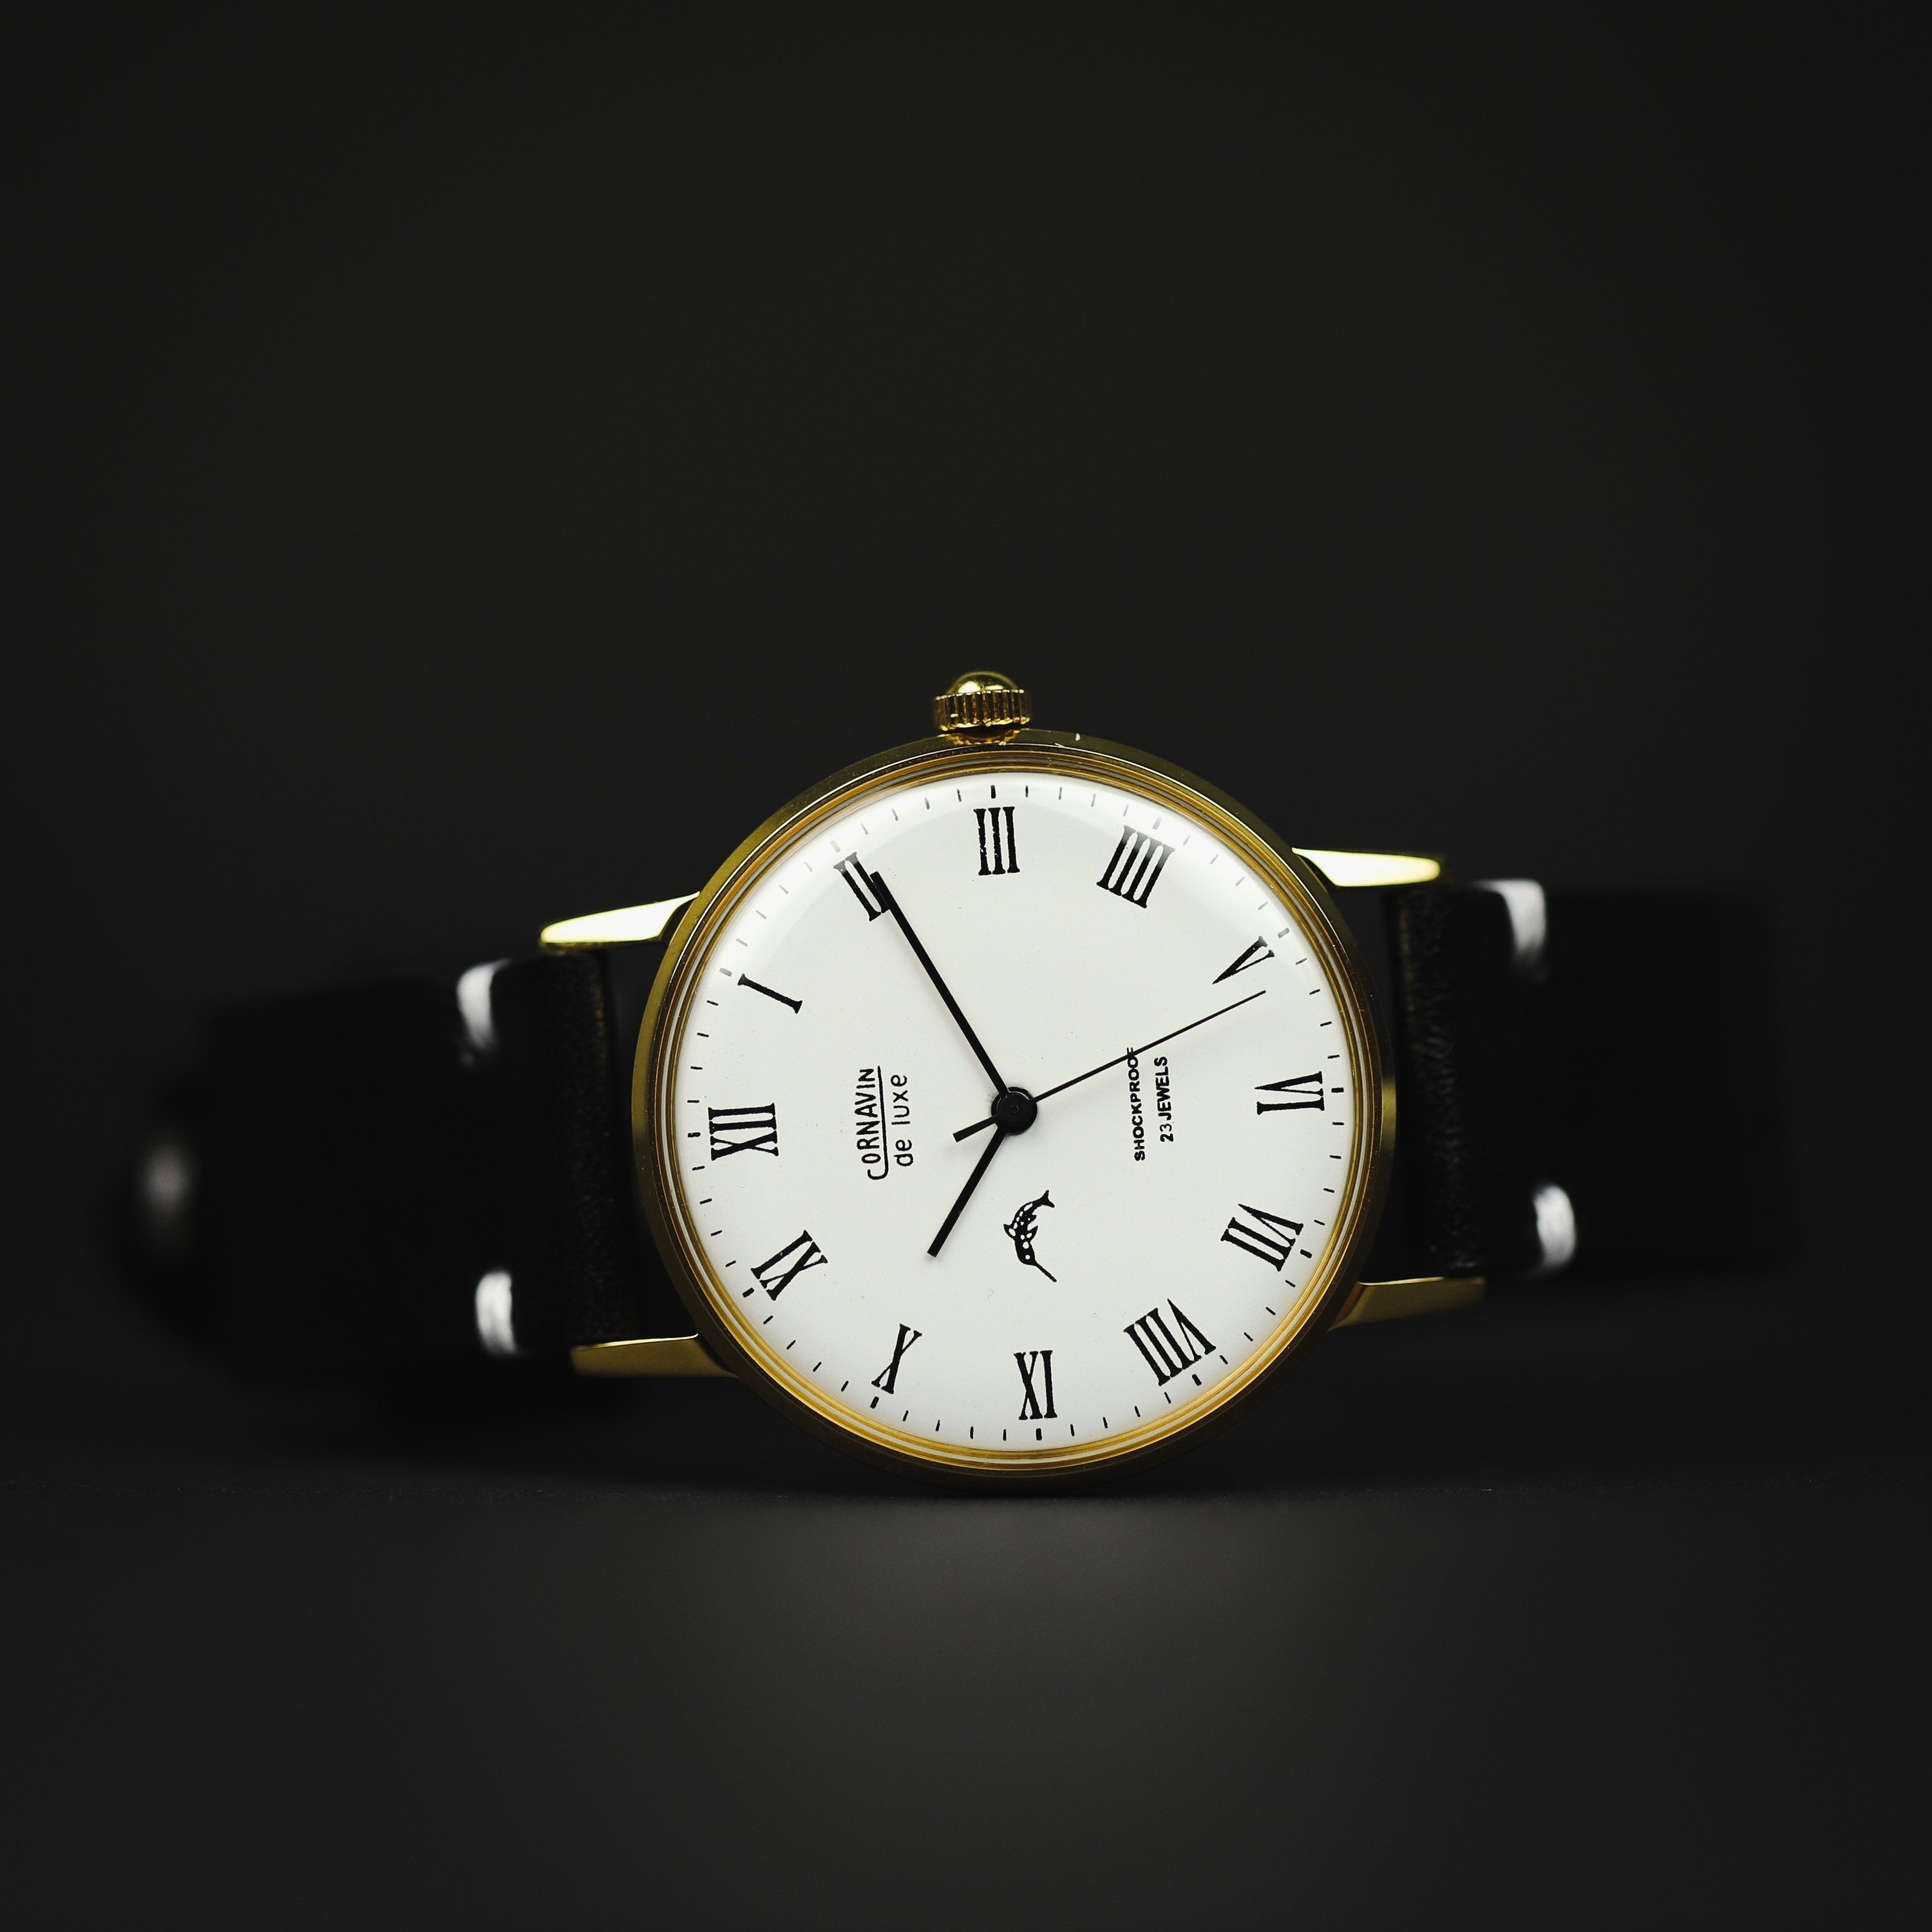 Ultra rare watch, Vintage watch, Cornavin watch, watches for men, White watch, Mechanical watch, Retro watch, Russian watch, Rare watch